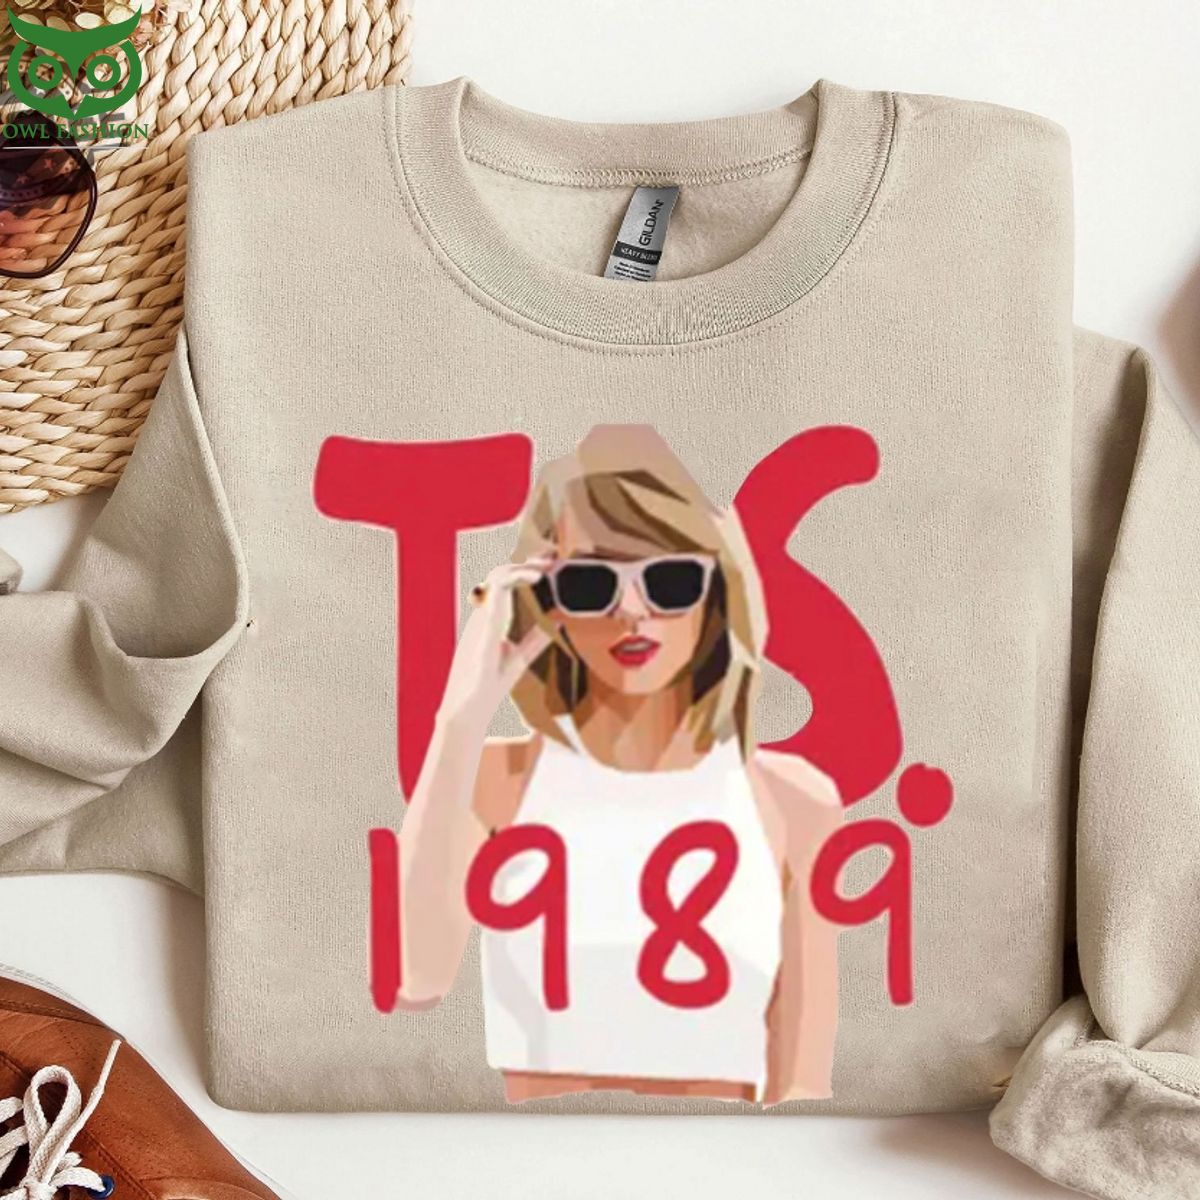 1989 Taylor Swift Eras Tour sweatshirt Best picture ever